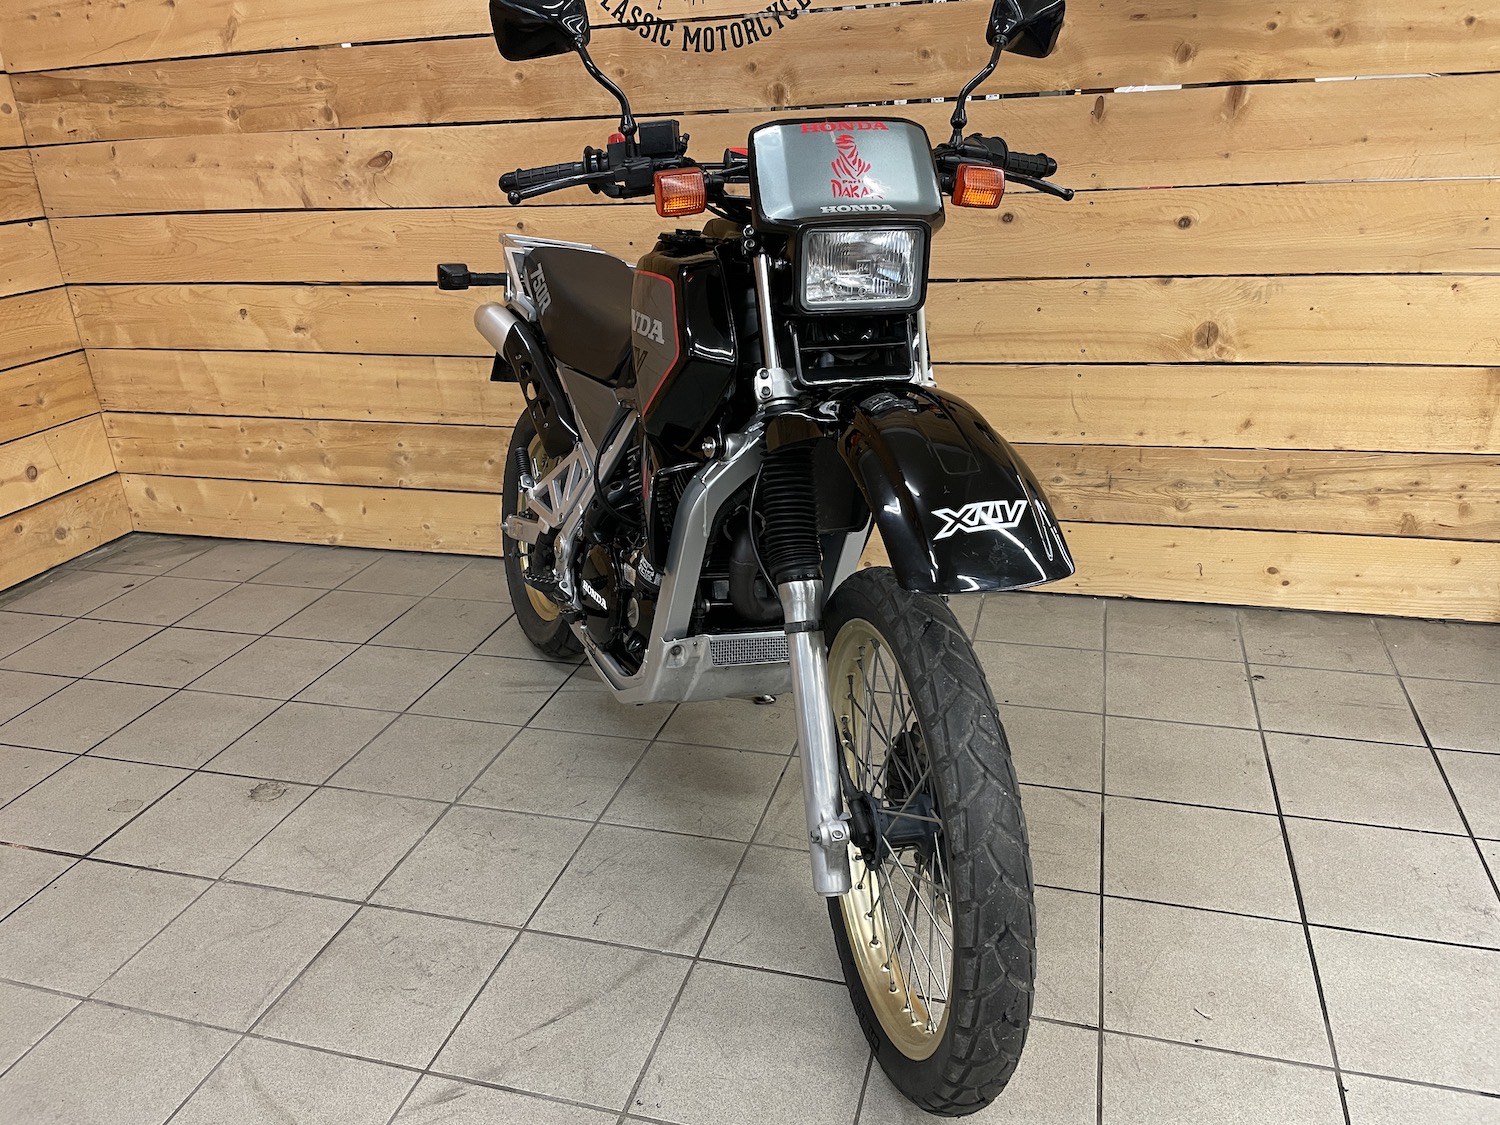 Honda_XLV_750R_cezanne_classic_motorcycles_11-118.jpg